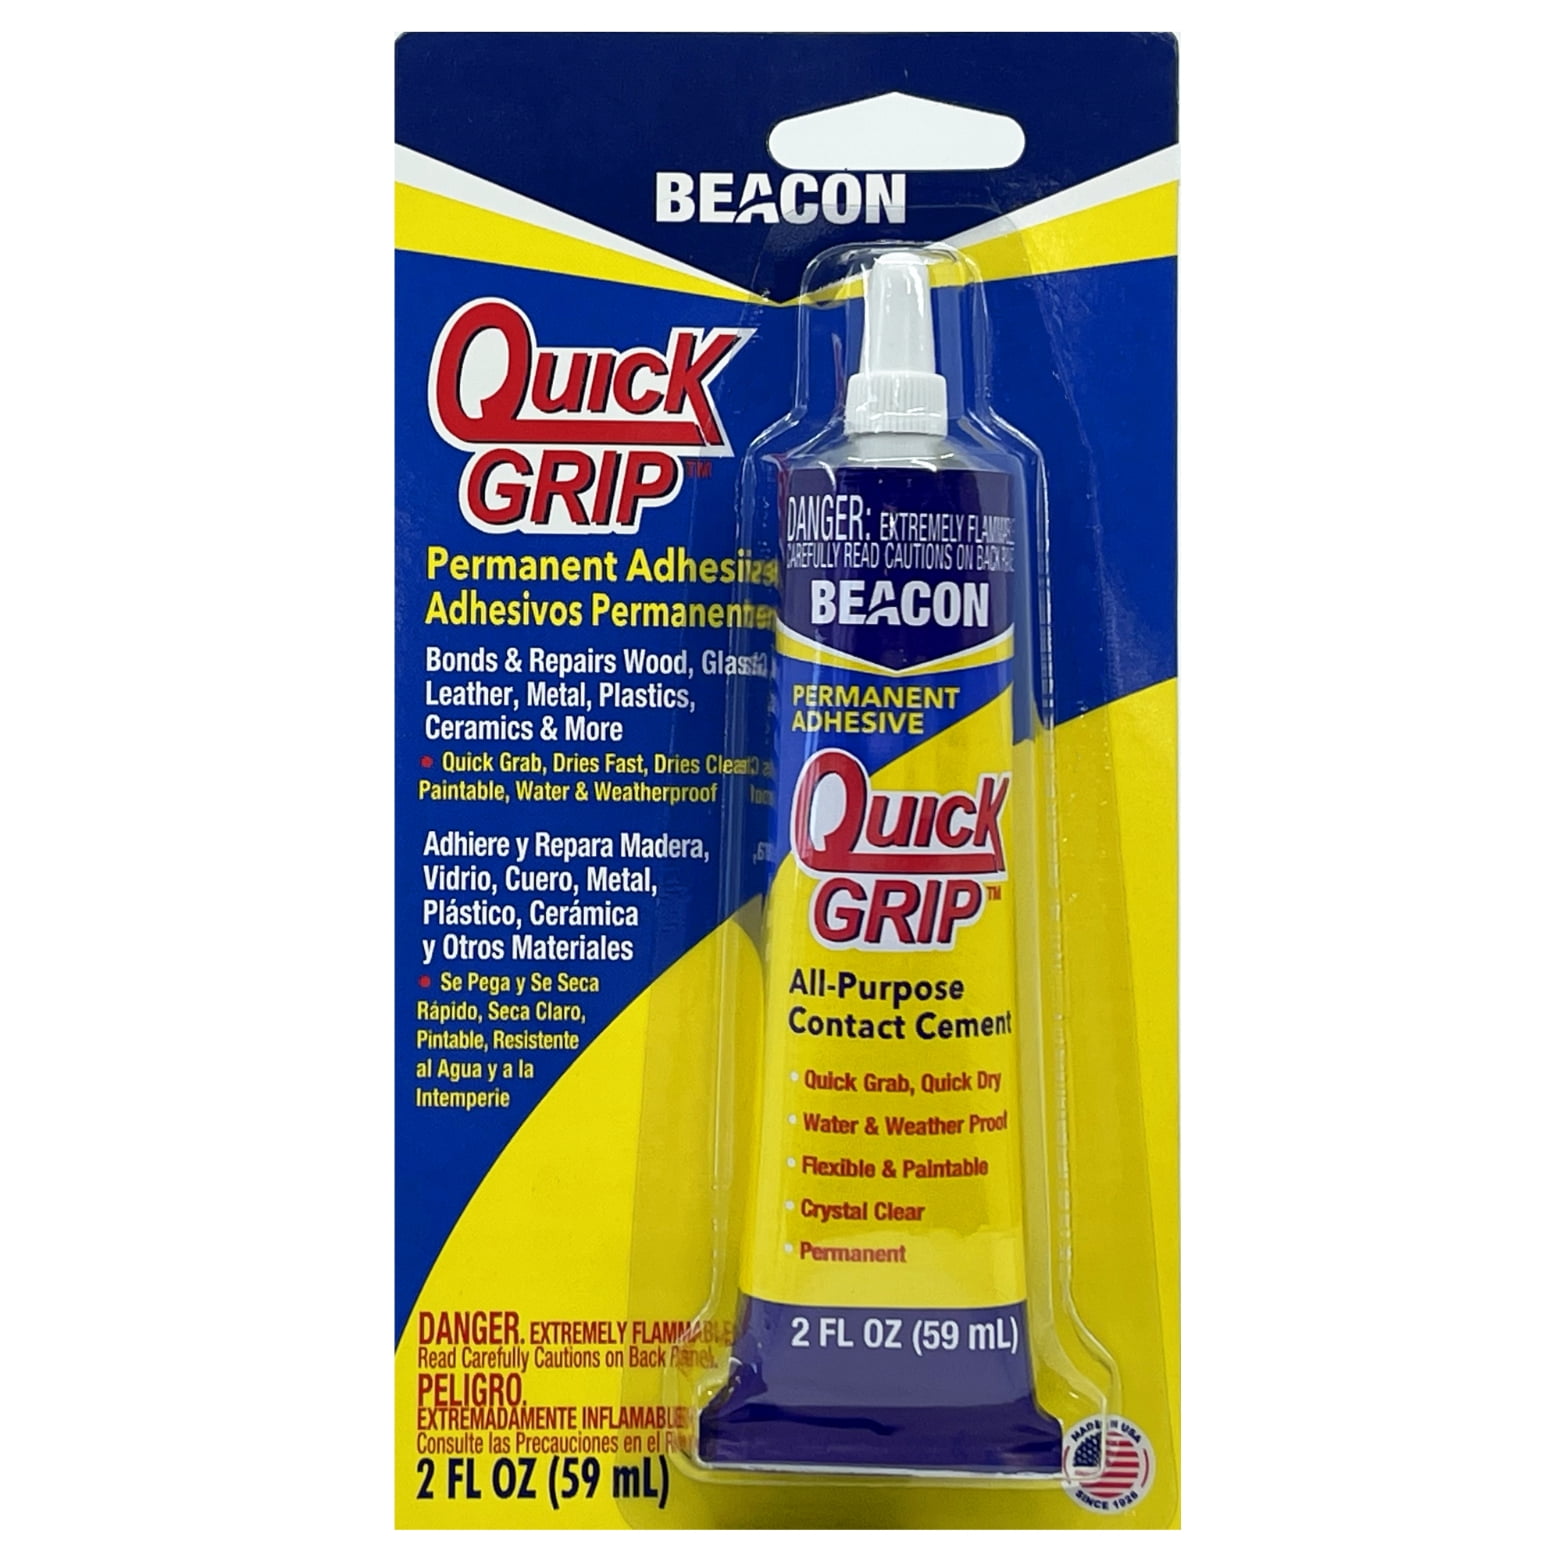 Beacon 3-in-1 Advanced Craft Glue - 4 oz.